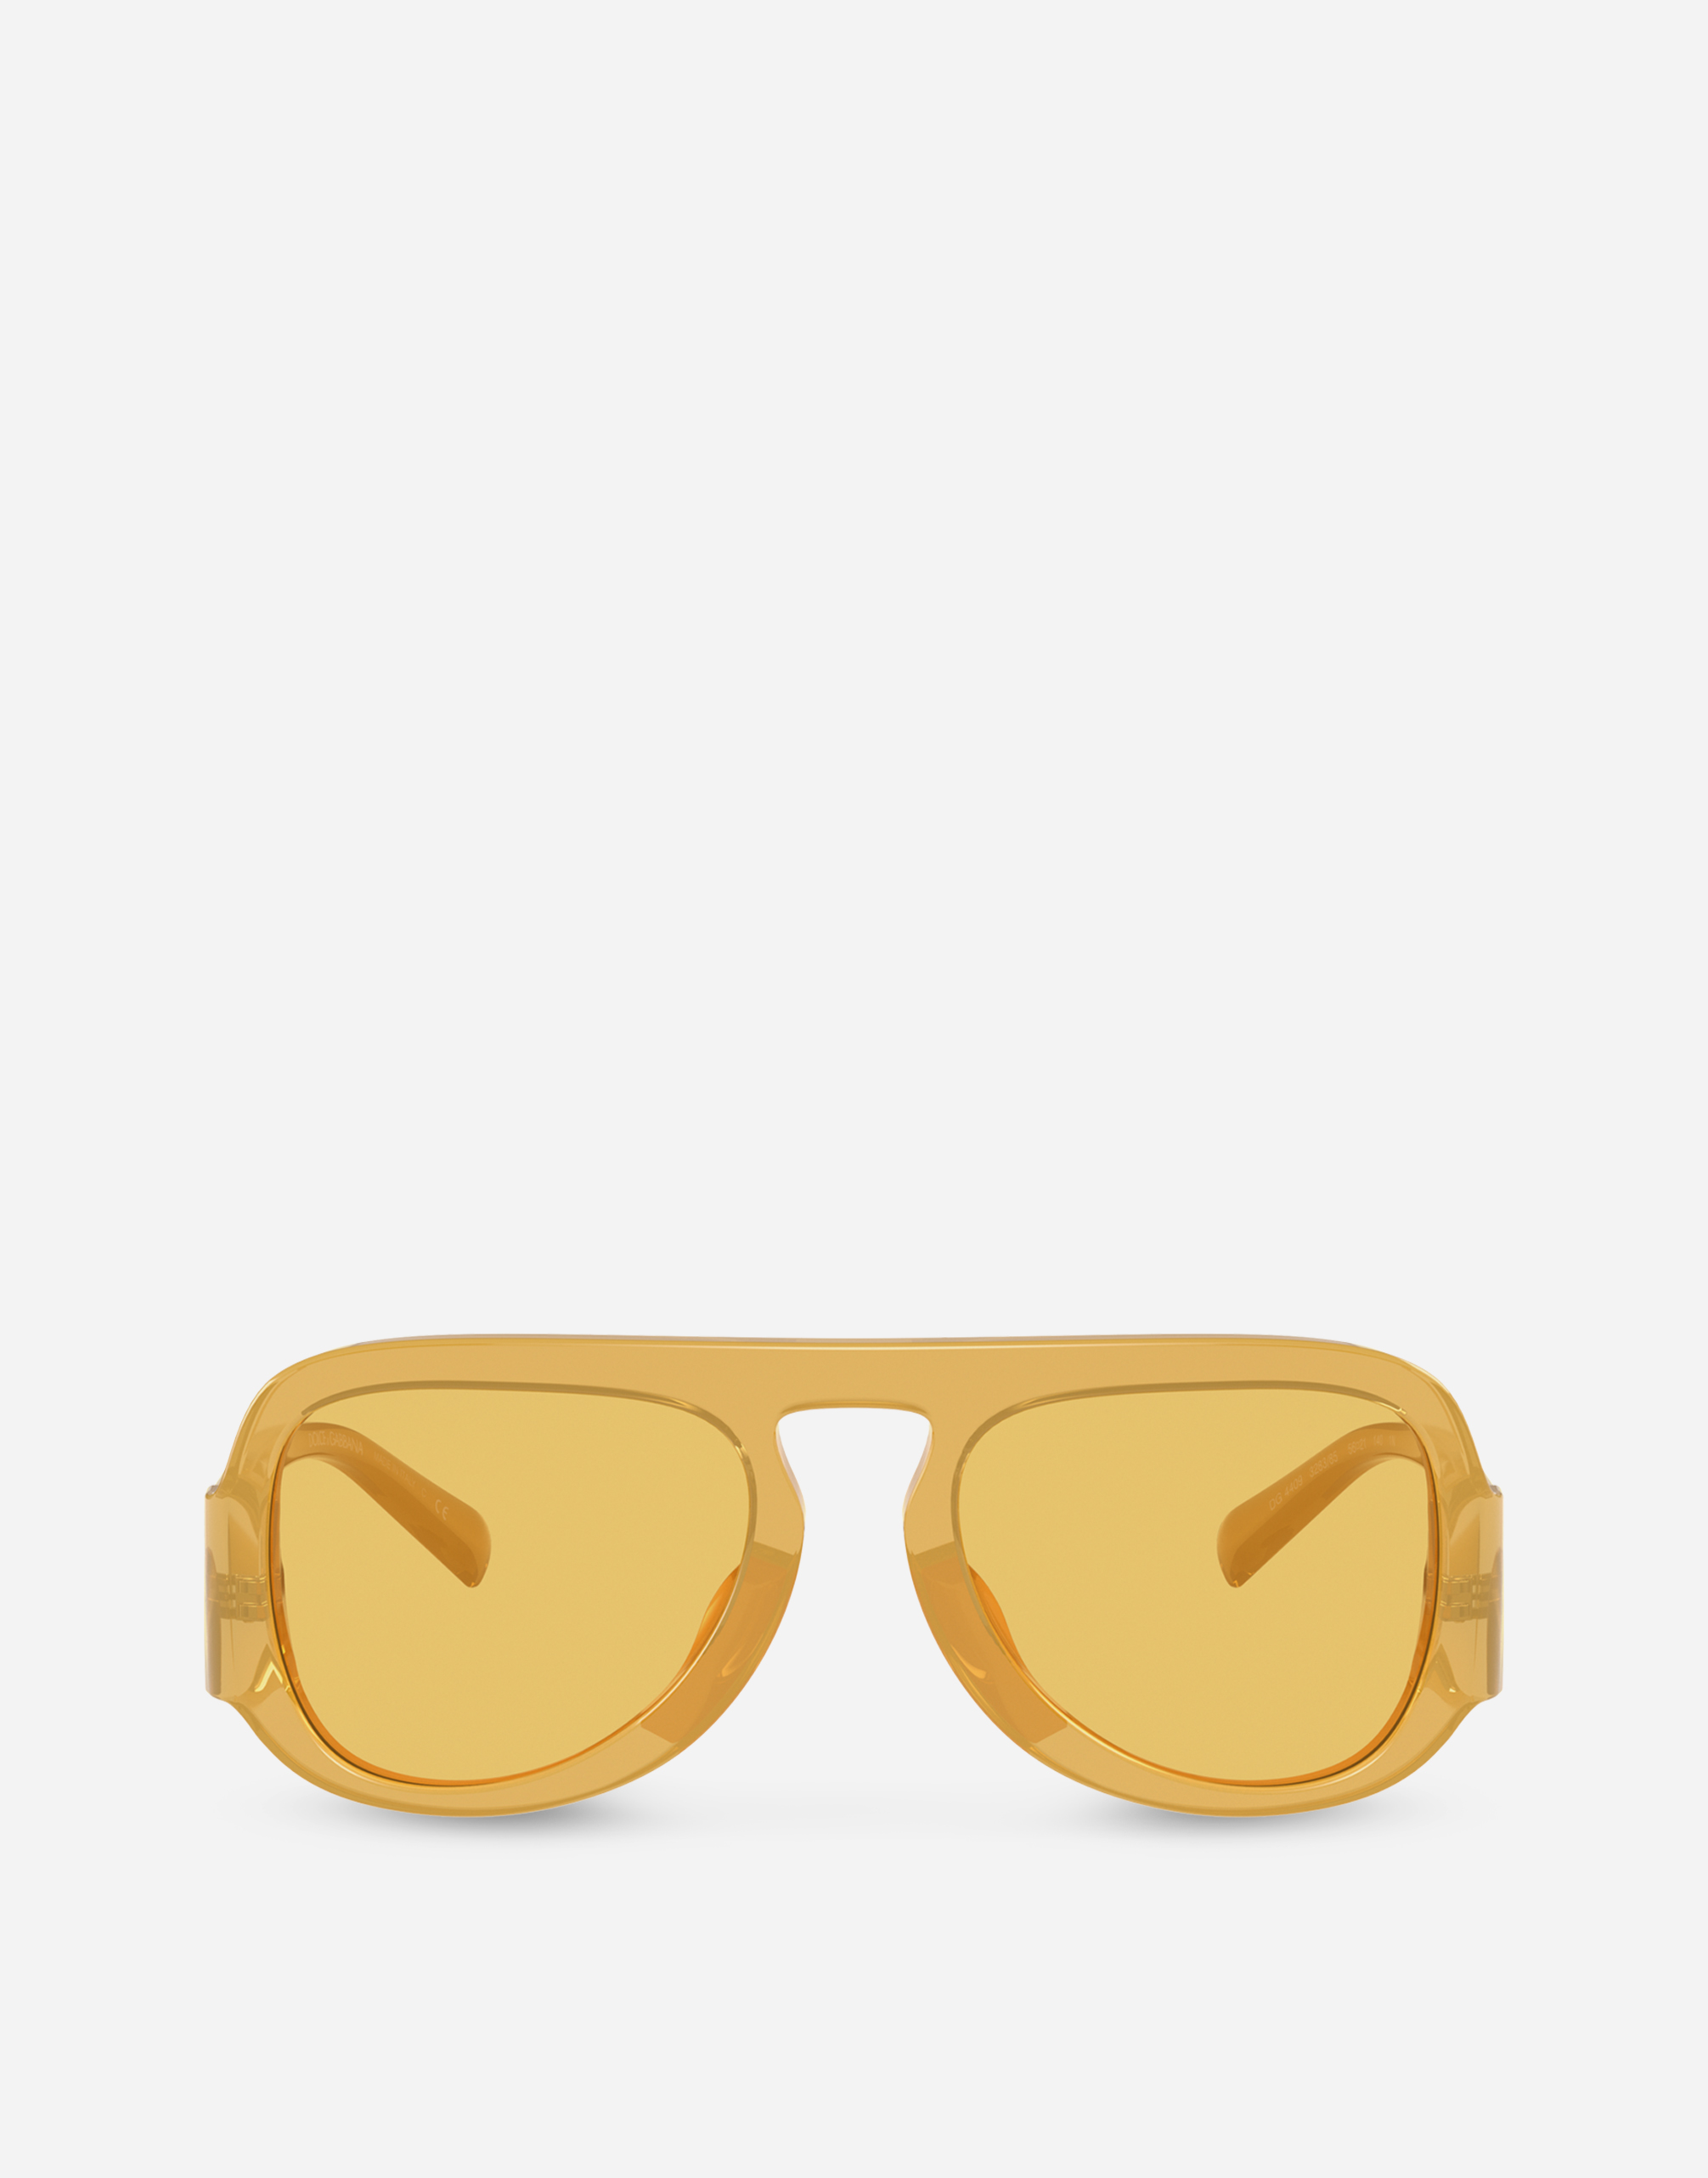 Magnificent sunglasses in Honey opaline